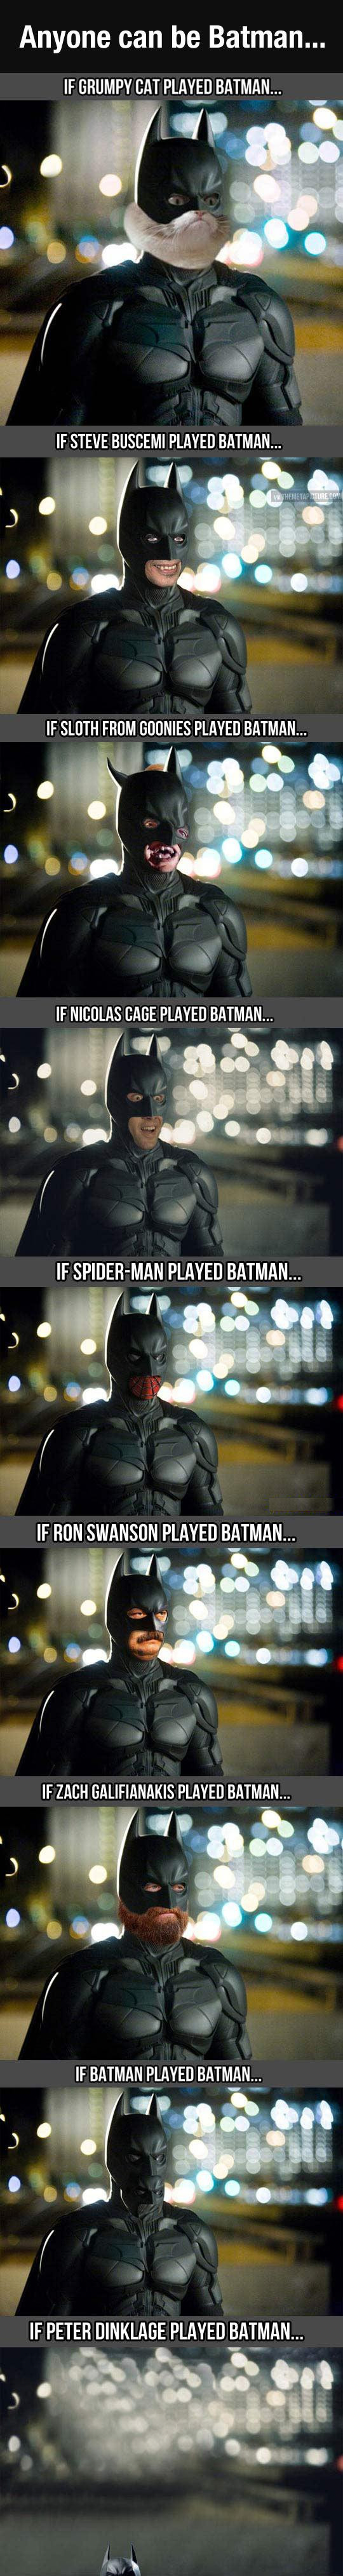 Anyone can be Batman!